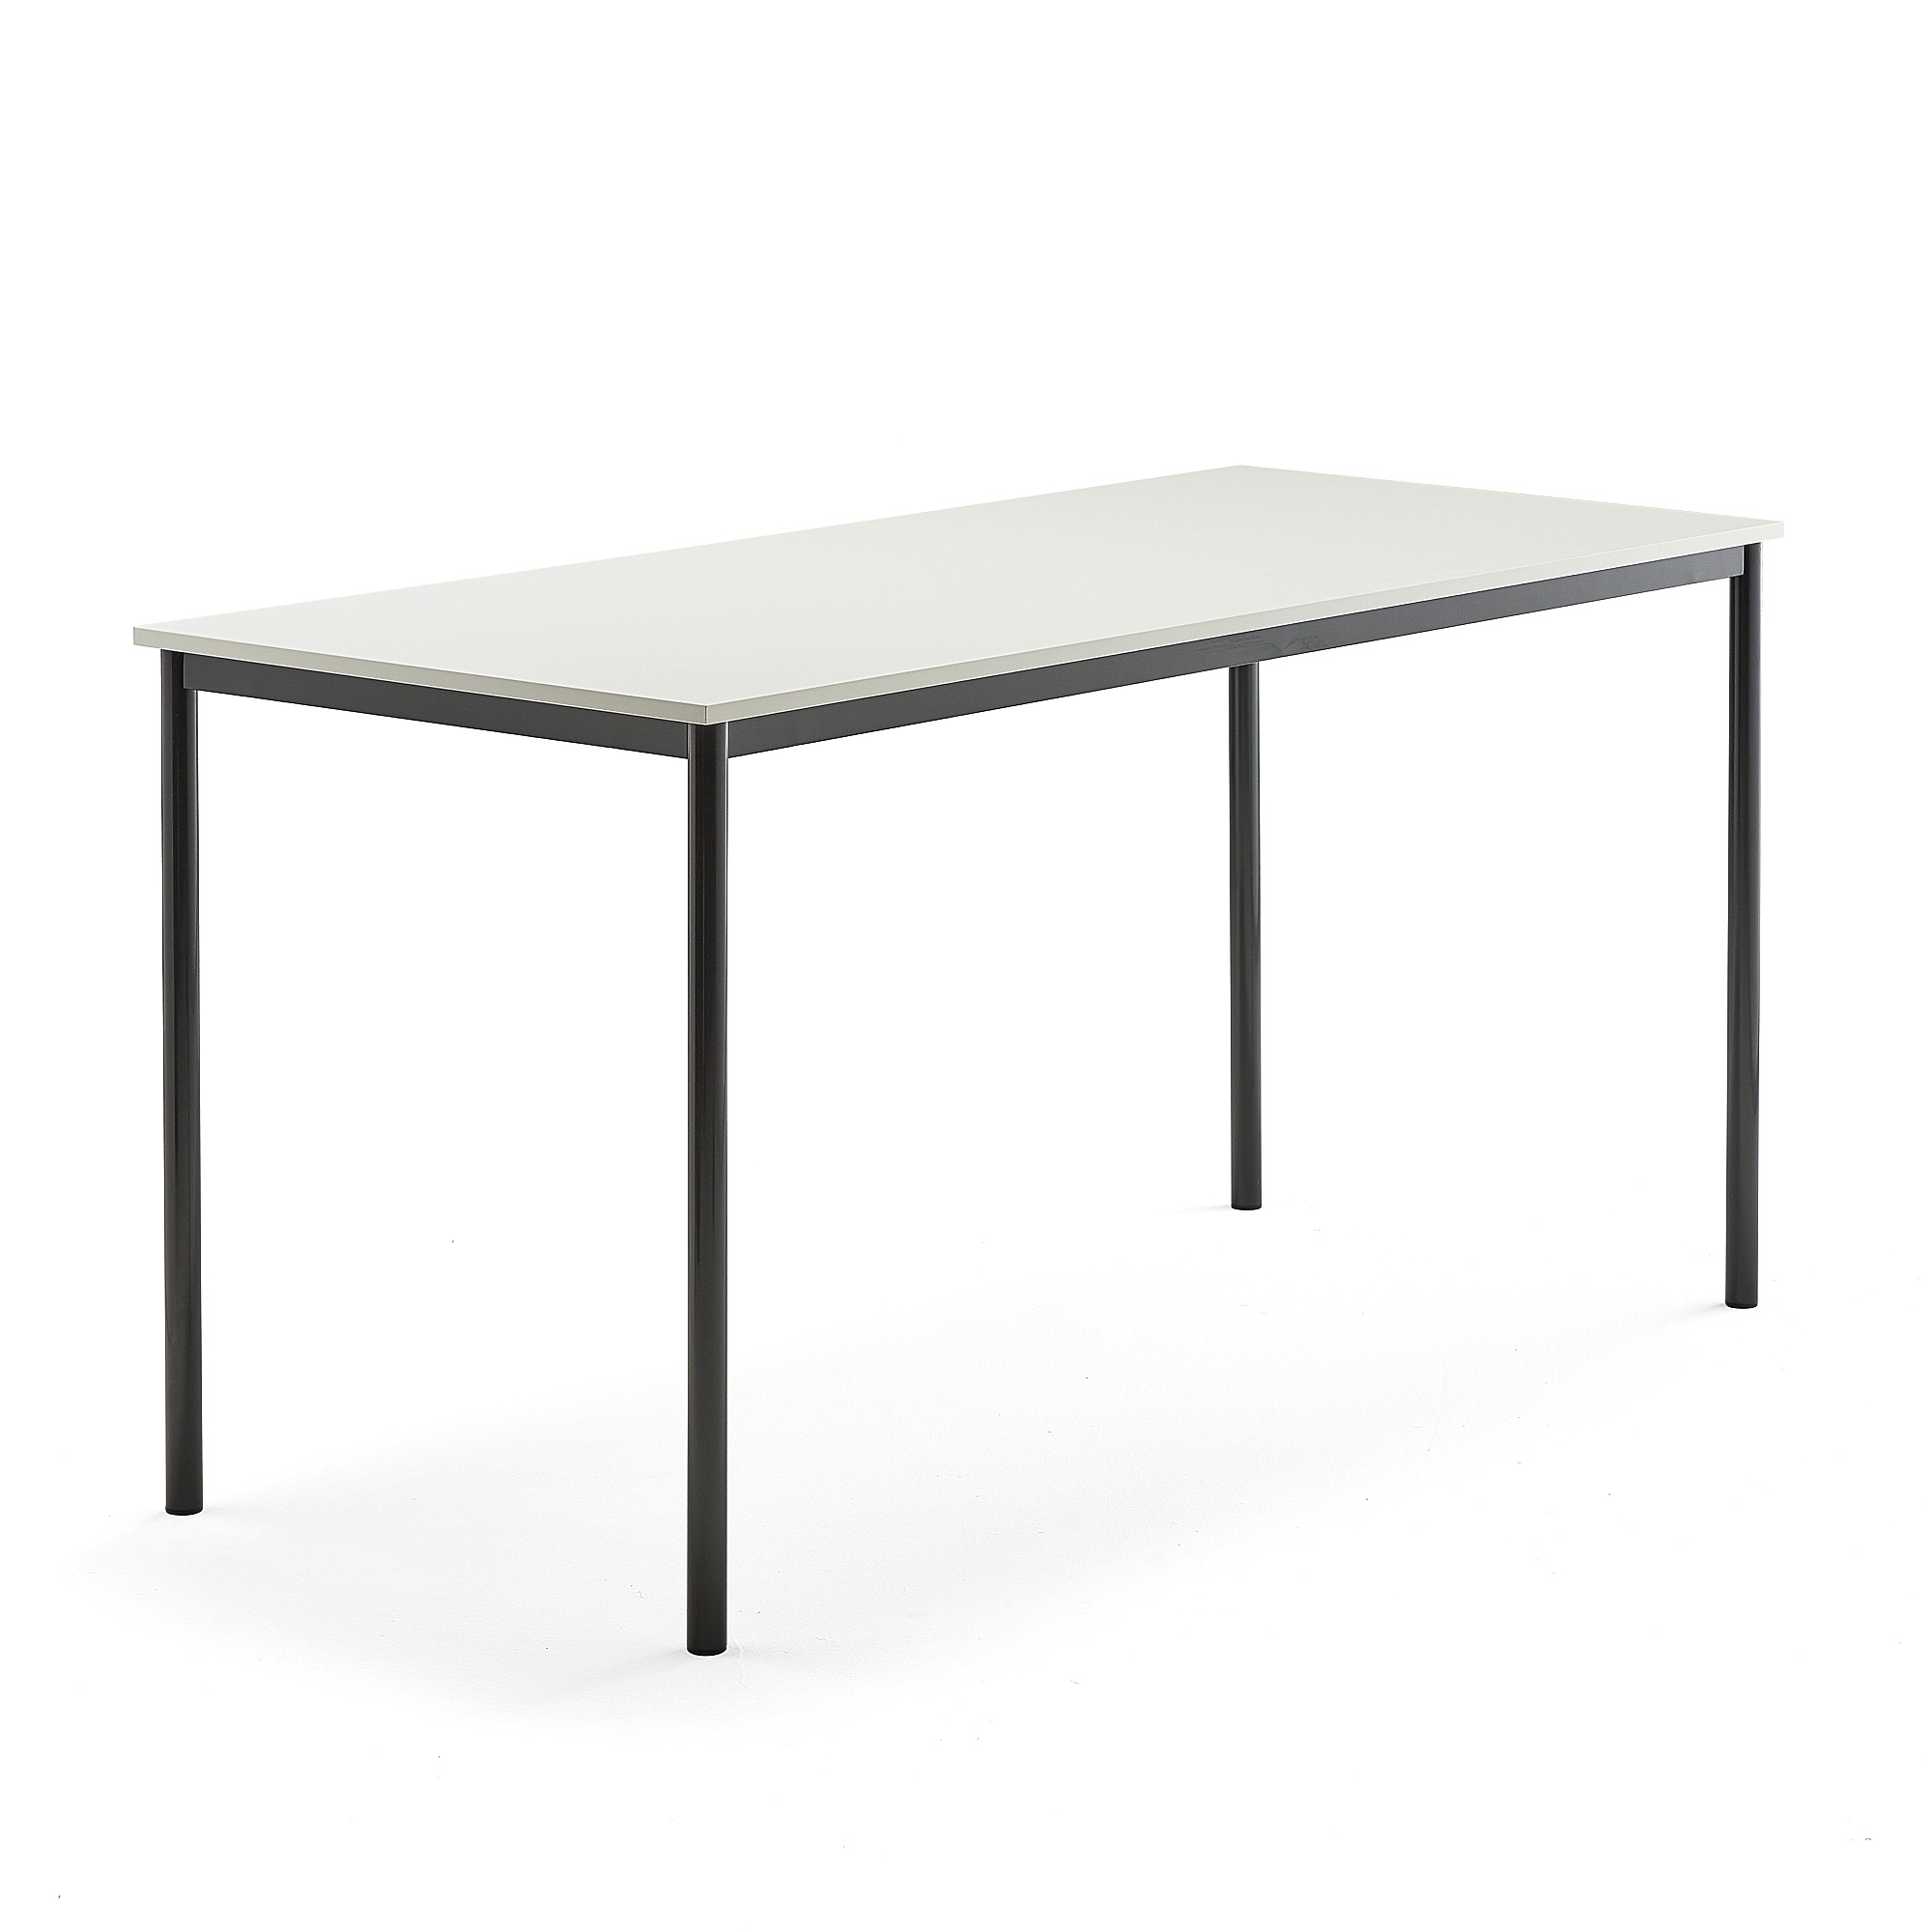 Stůl BORÅS, 1800x800x900 mm, antracitově šedé nohy, HPL deska, bílá